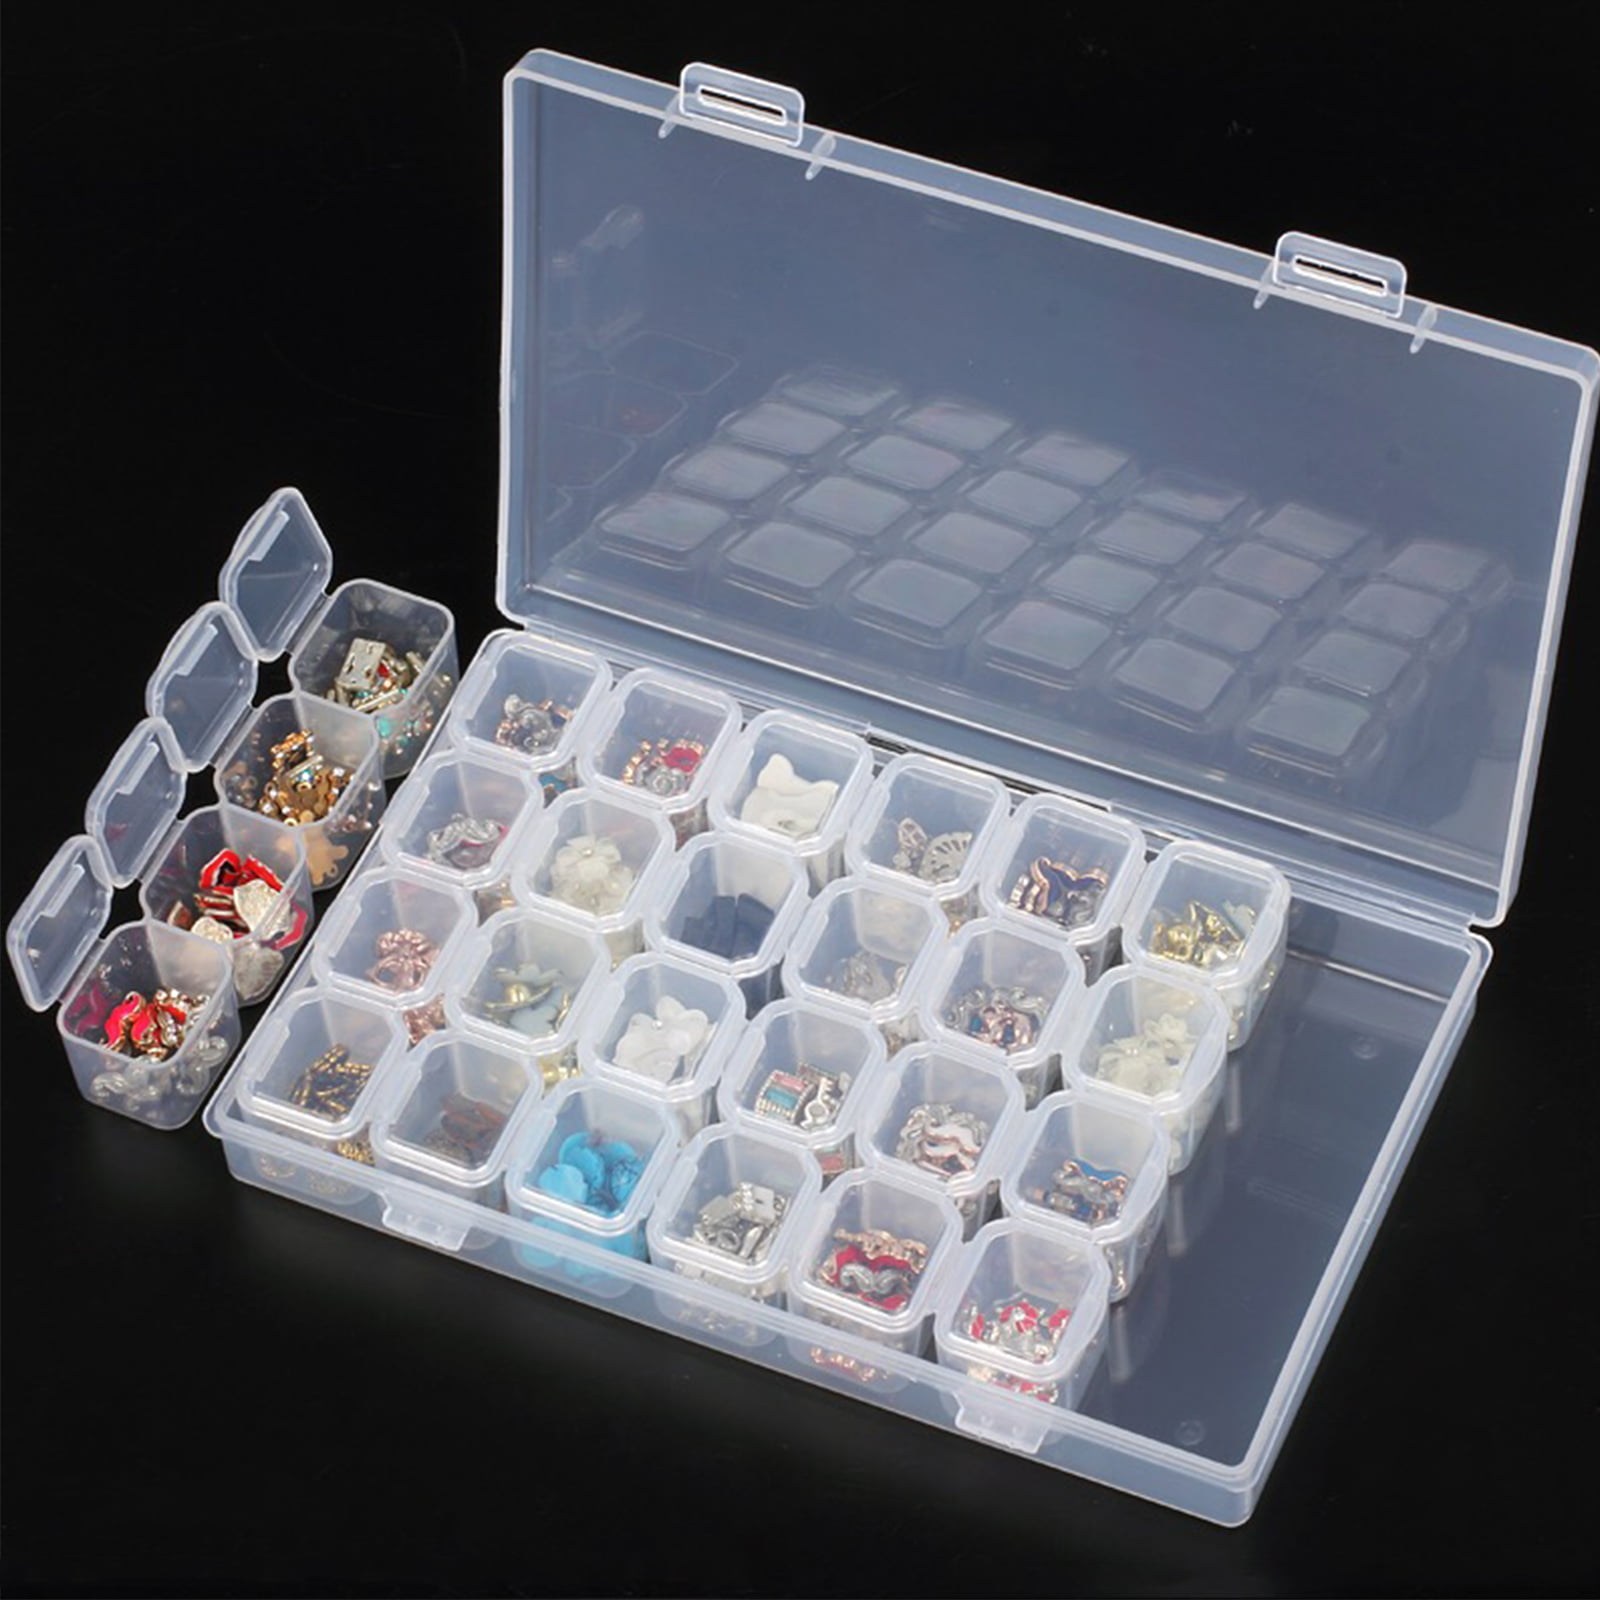 56 Grids Compartment Craft Organizer Plastic Box Jewelry Bead Storage Container 